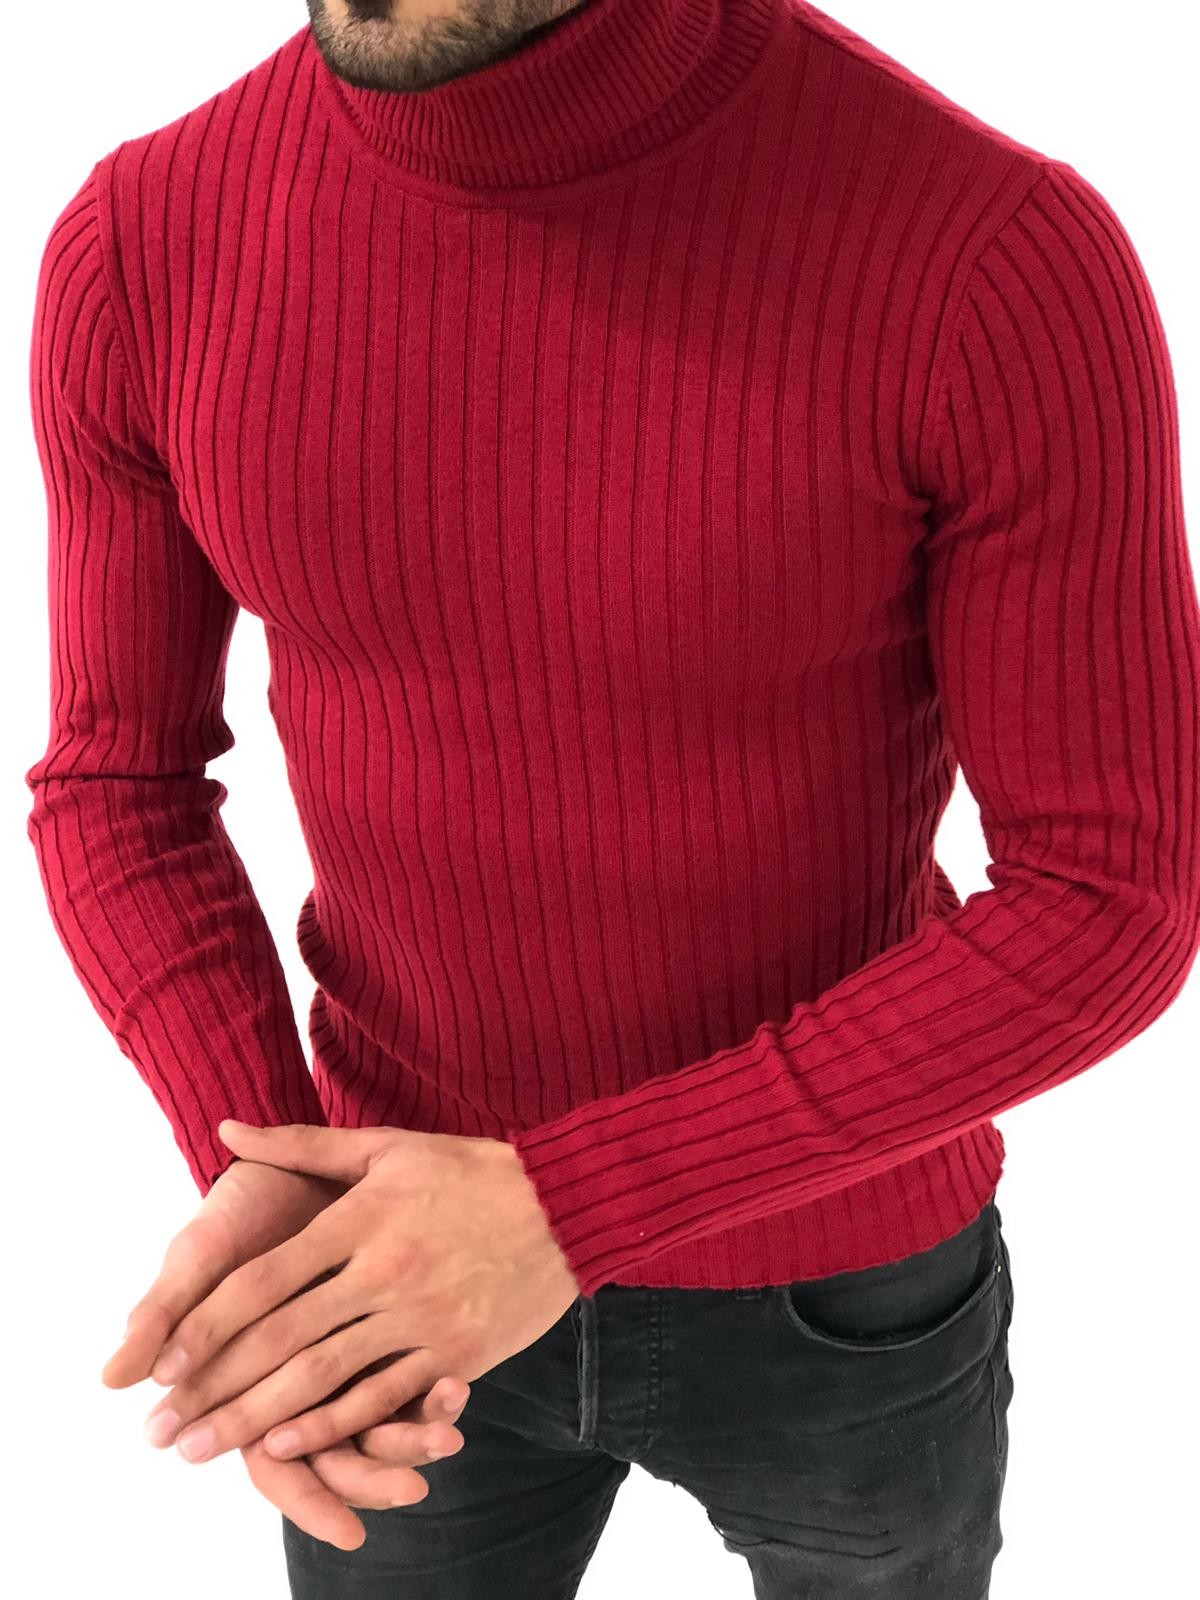 https://gentwith.com/wp-content/uploads/2019/01/Nige-Striped-Slim-Fit-Turtleneck-Sweater-%E2%80%93-Red.jpeg